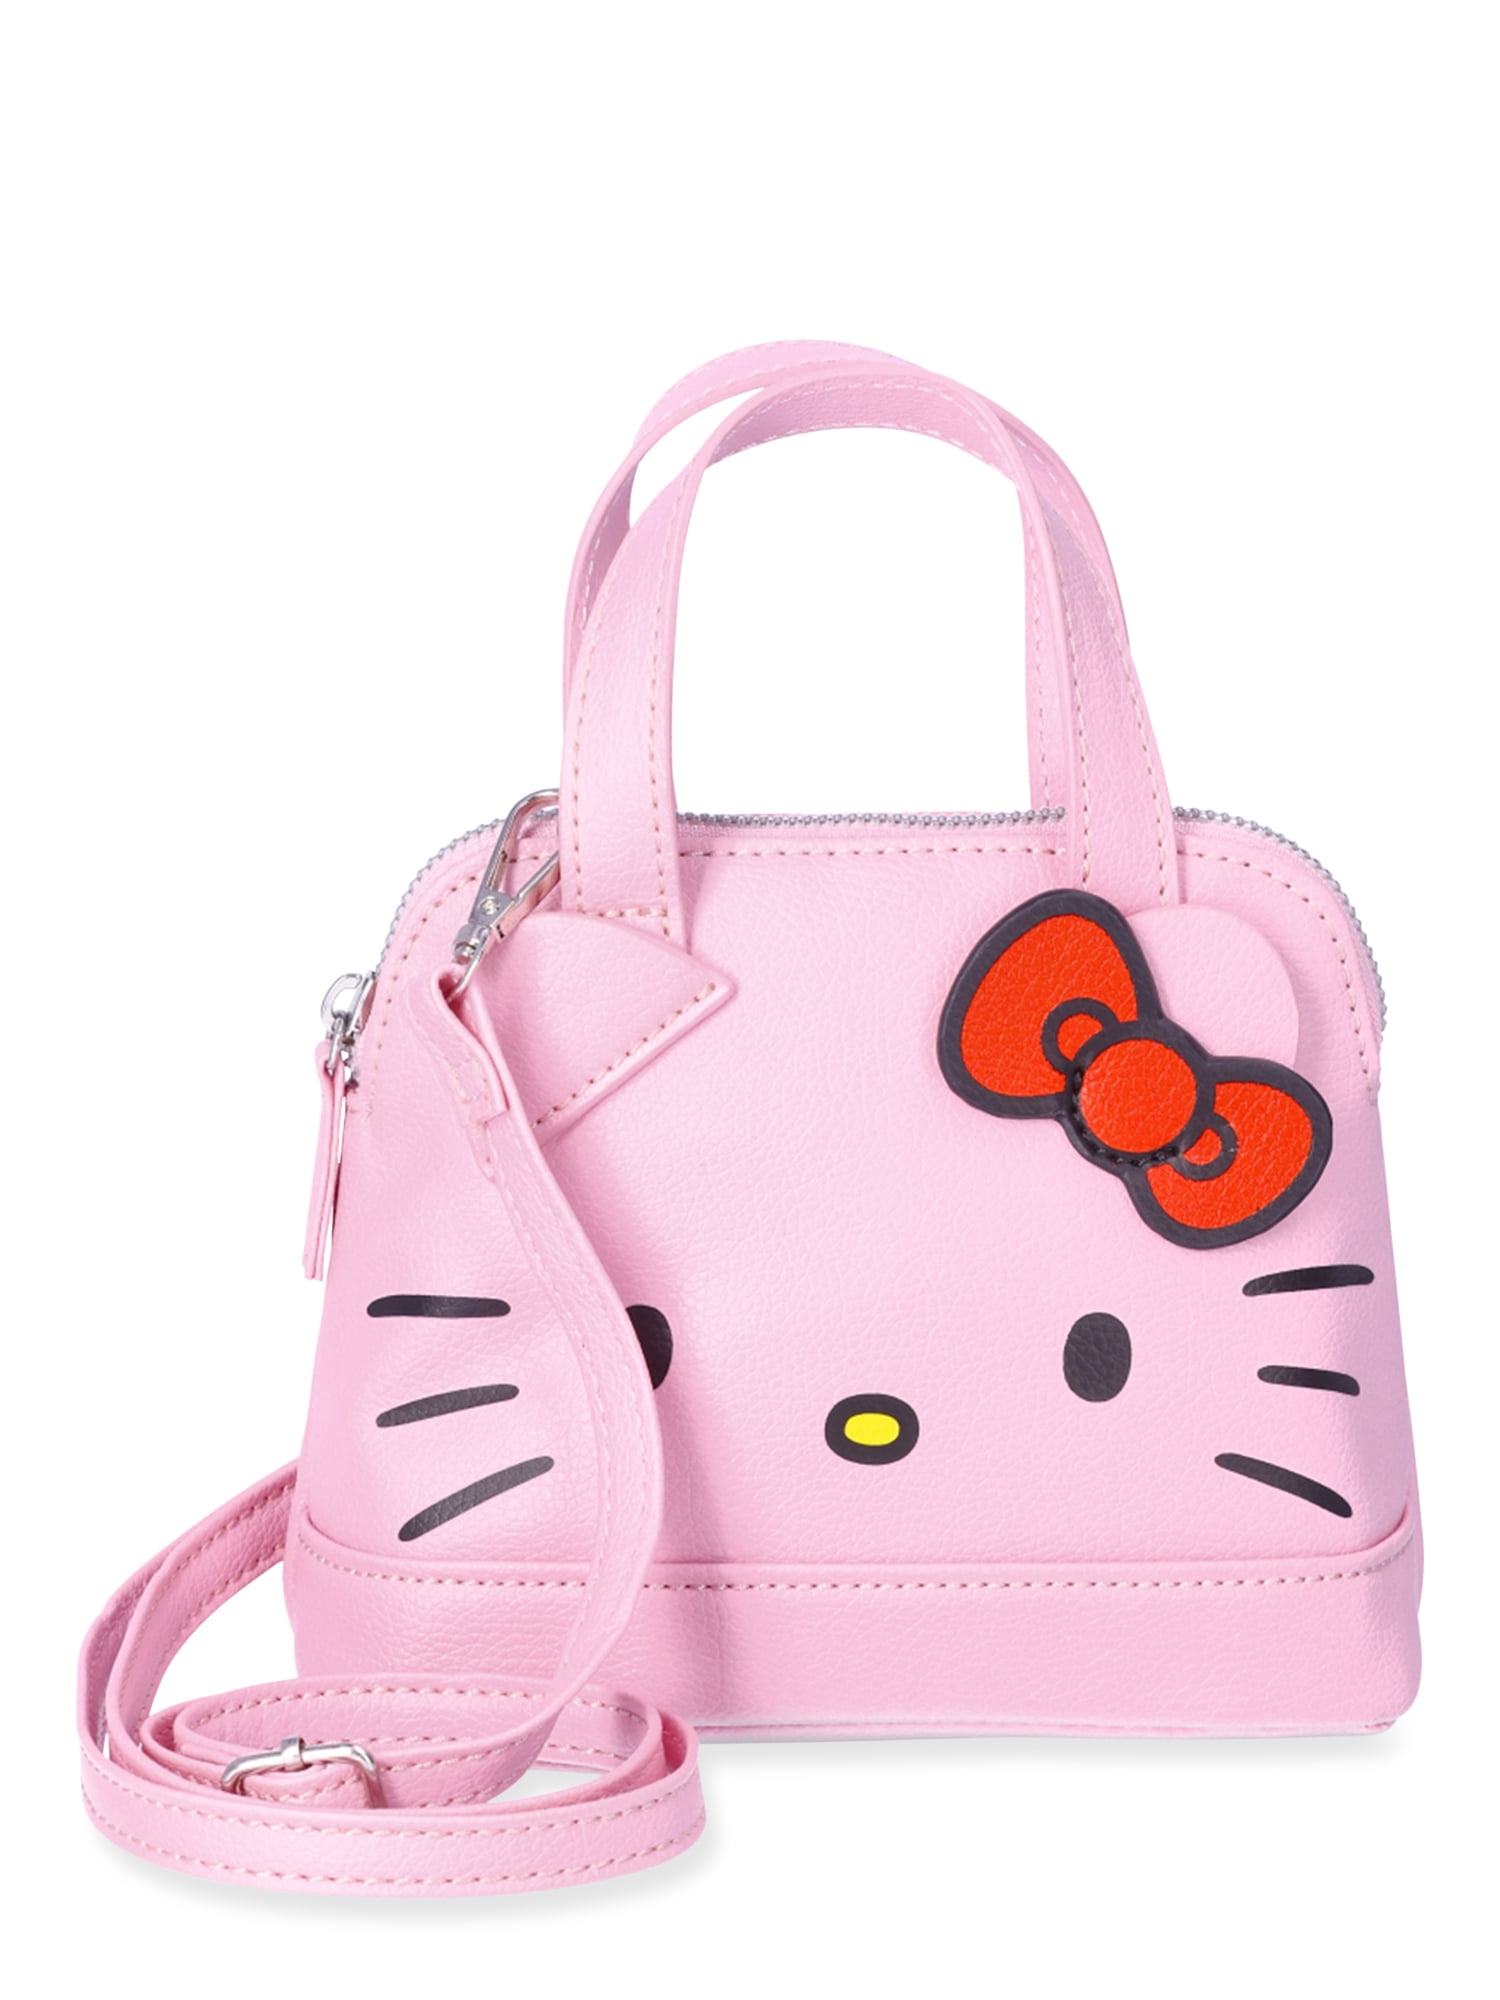 Hello Kitty Girls' Mini Dome Handbag, Pink - Walmart.com